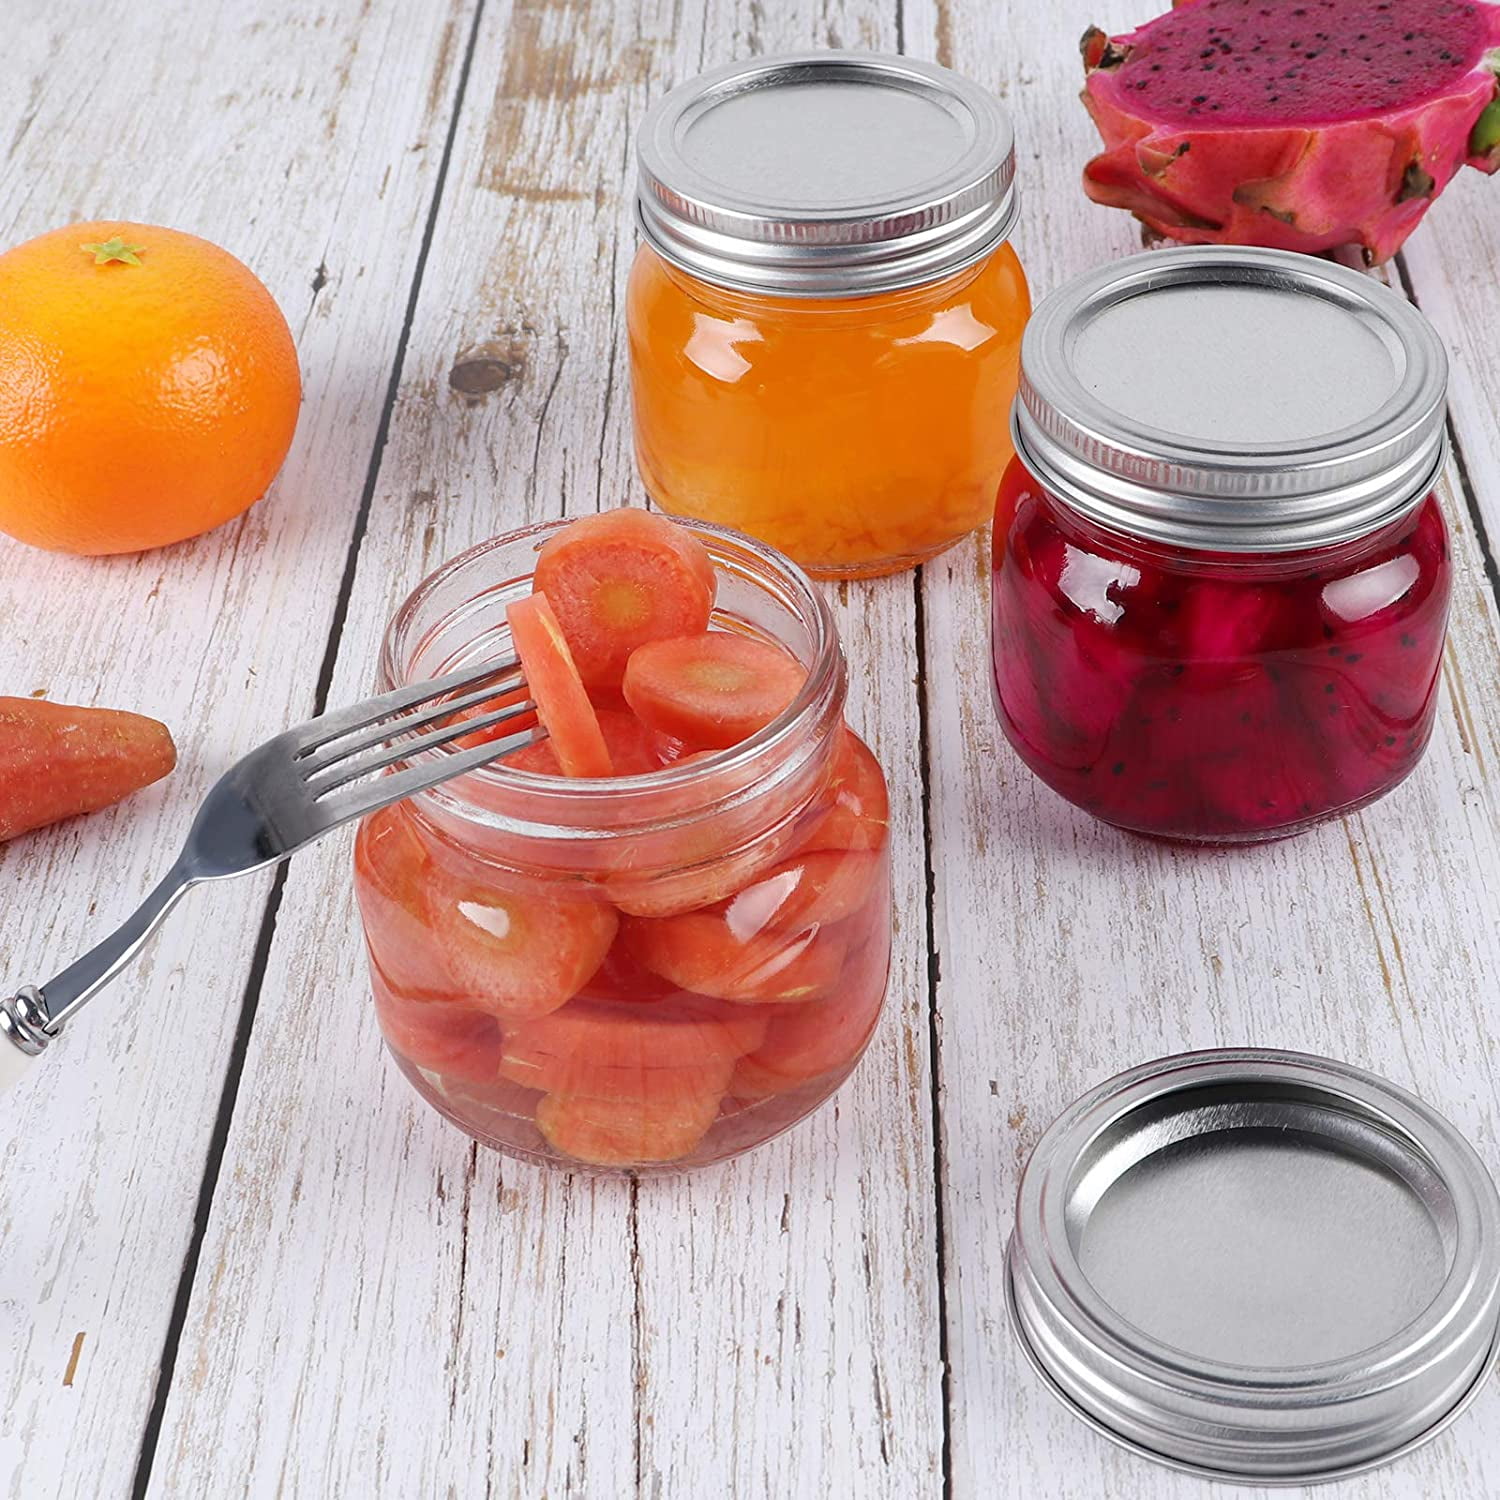  Regular Mouth Mason Jars 8 oz [12Pack] Jelly Jars with Lids 8 oz.  For Canning, Fermenting, Conserving Syrups, Sauces, Jams, Baby Foods -  Microwave/Freeze/Dishwasher Safe + SEWANTA Jar Opener: Home 